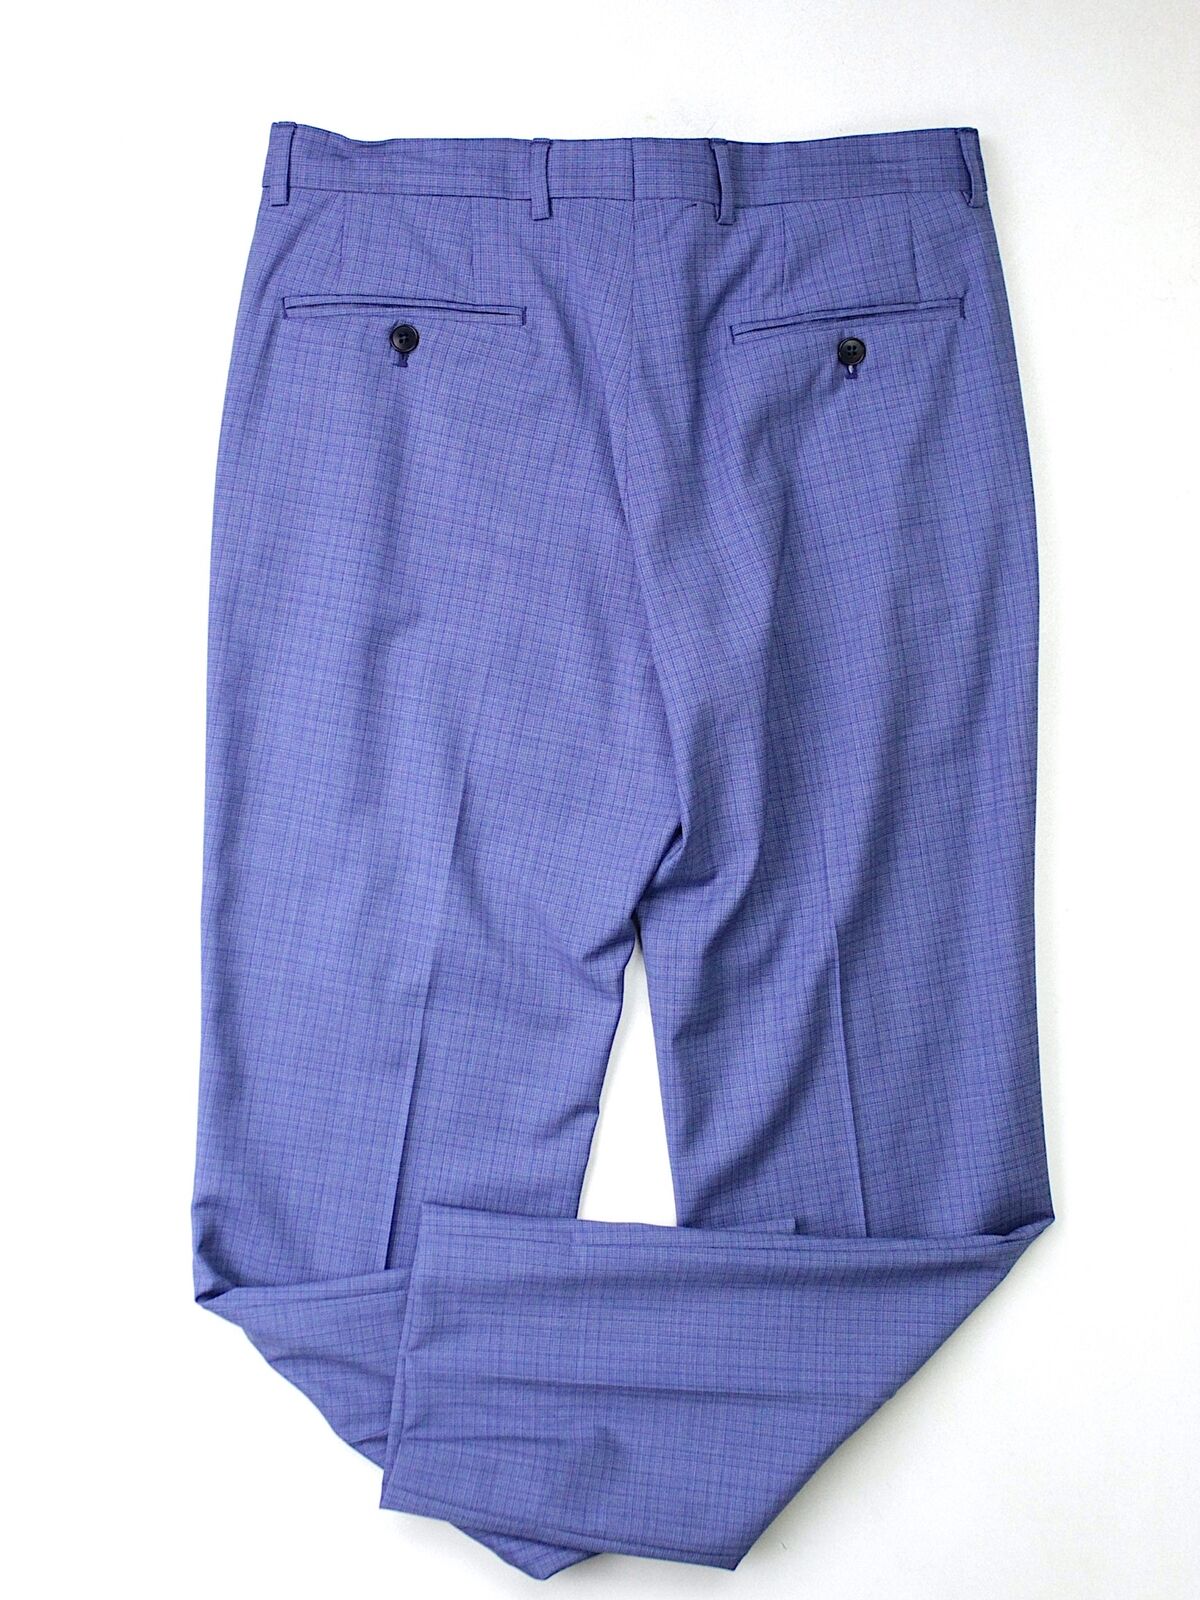 A|X ARMANI EXCHANGE Men's Slim-Fit Dress Pants 30 x 30 Blue Plaid